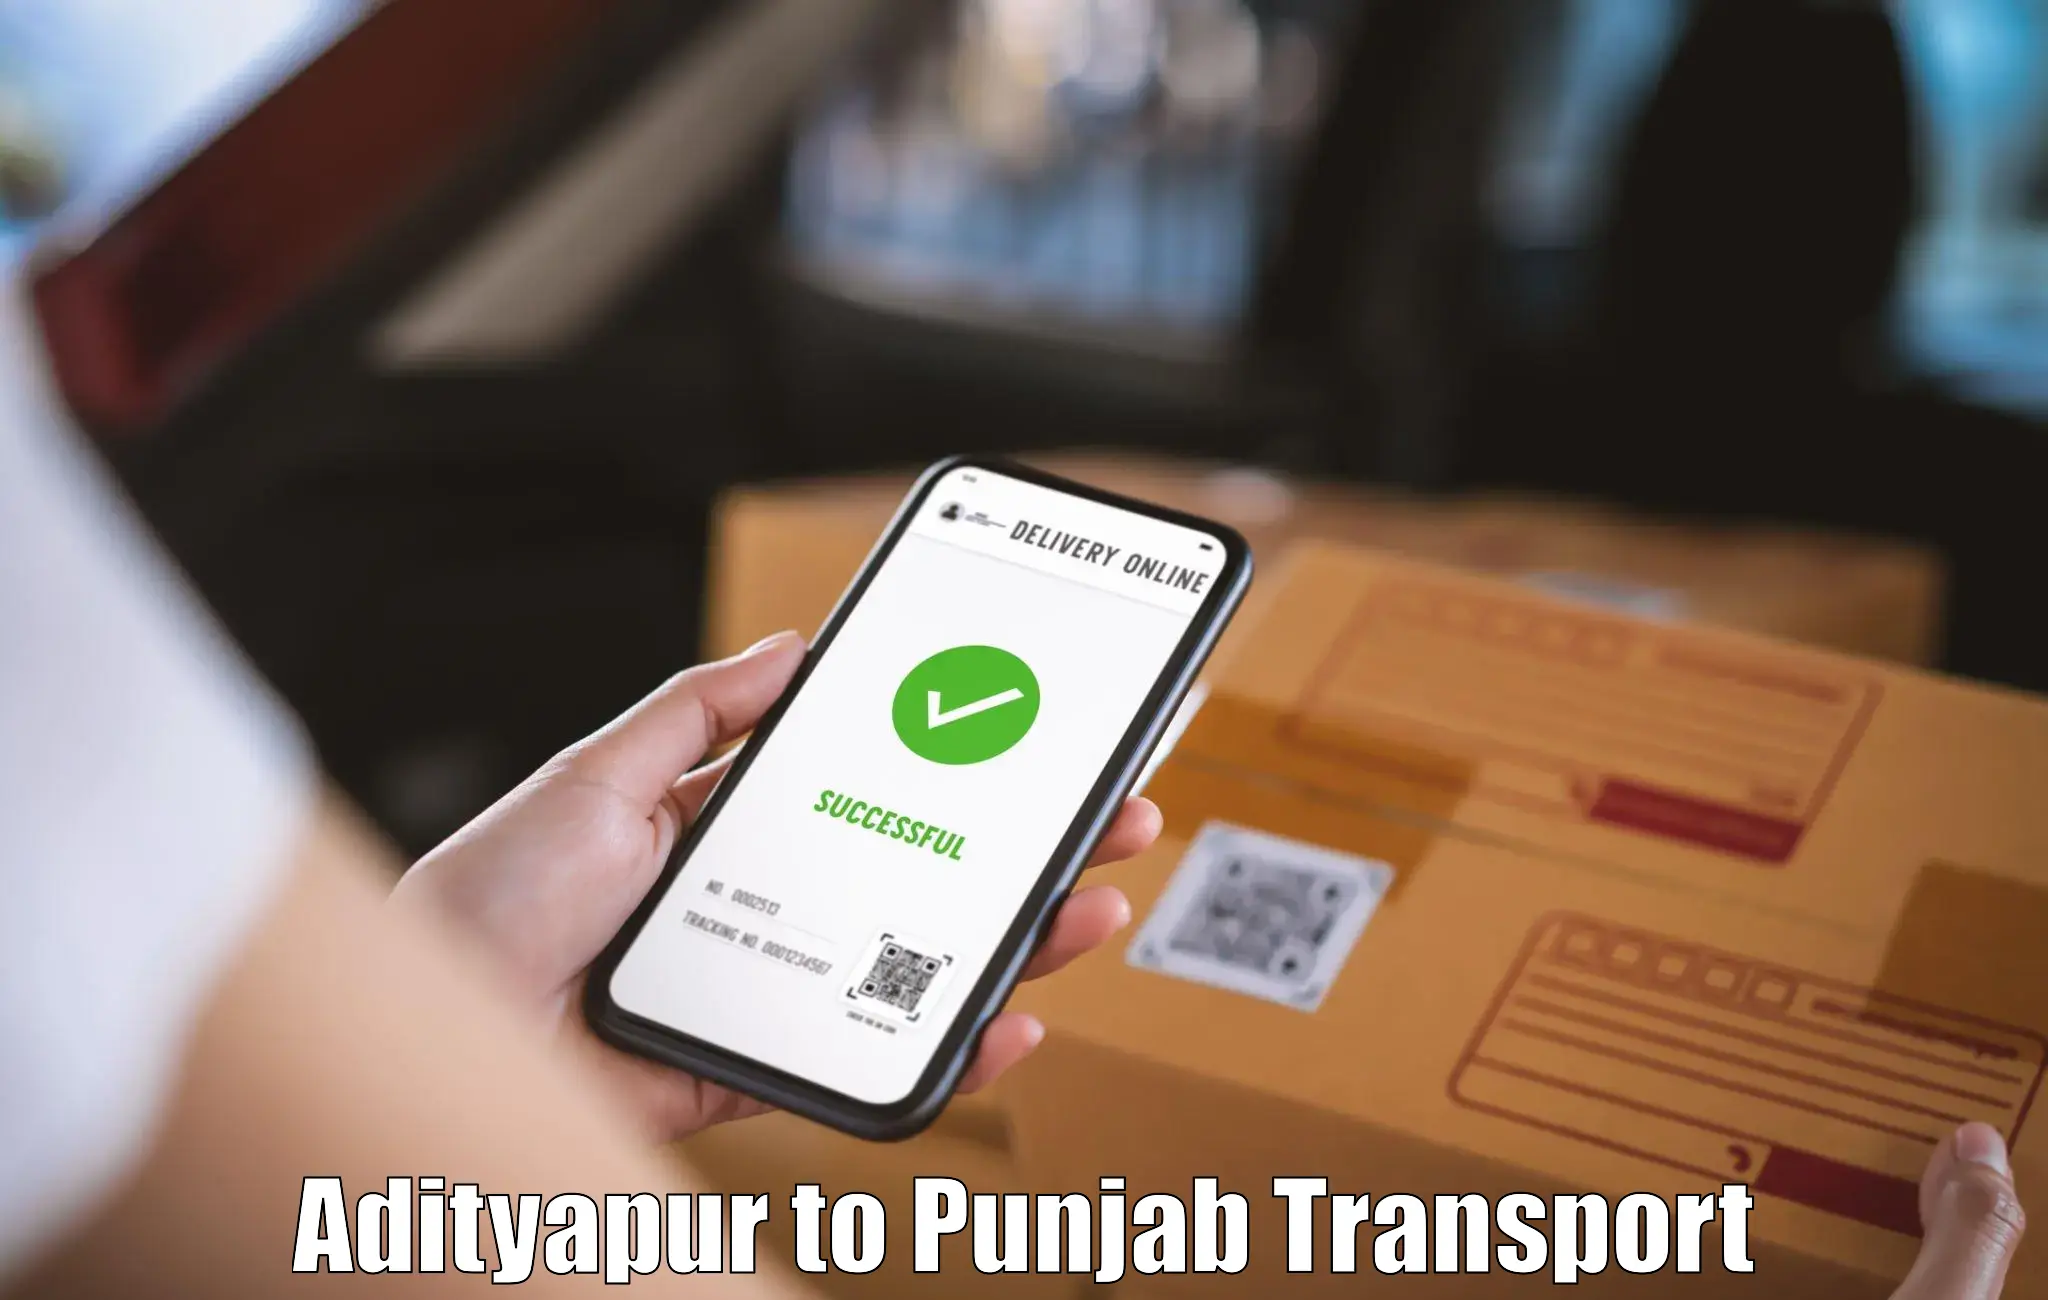 Nearest transport service Adityapur to Nawanshahr